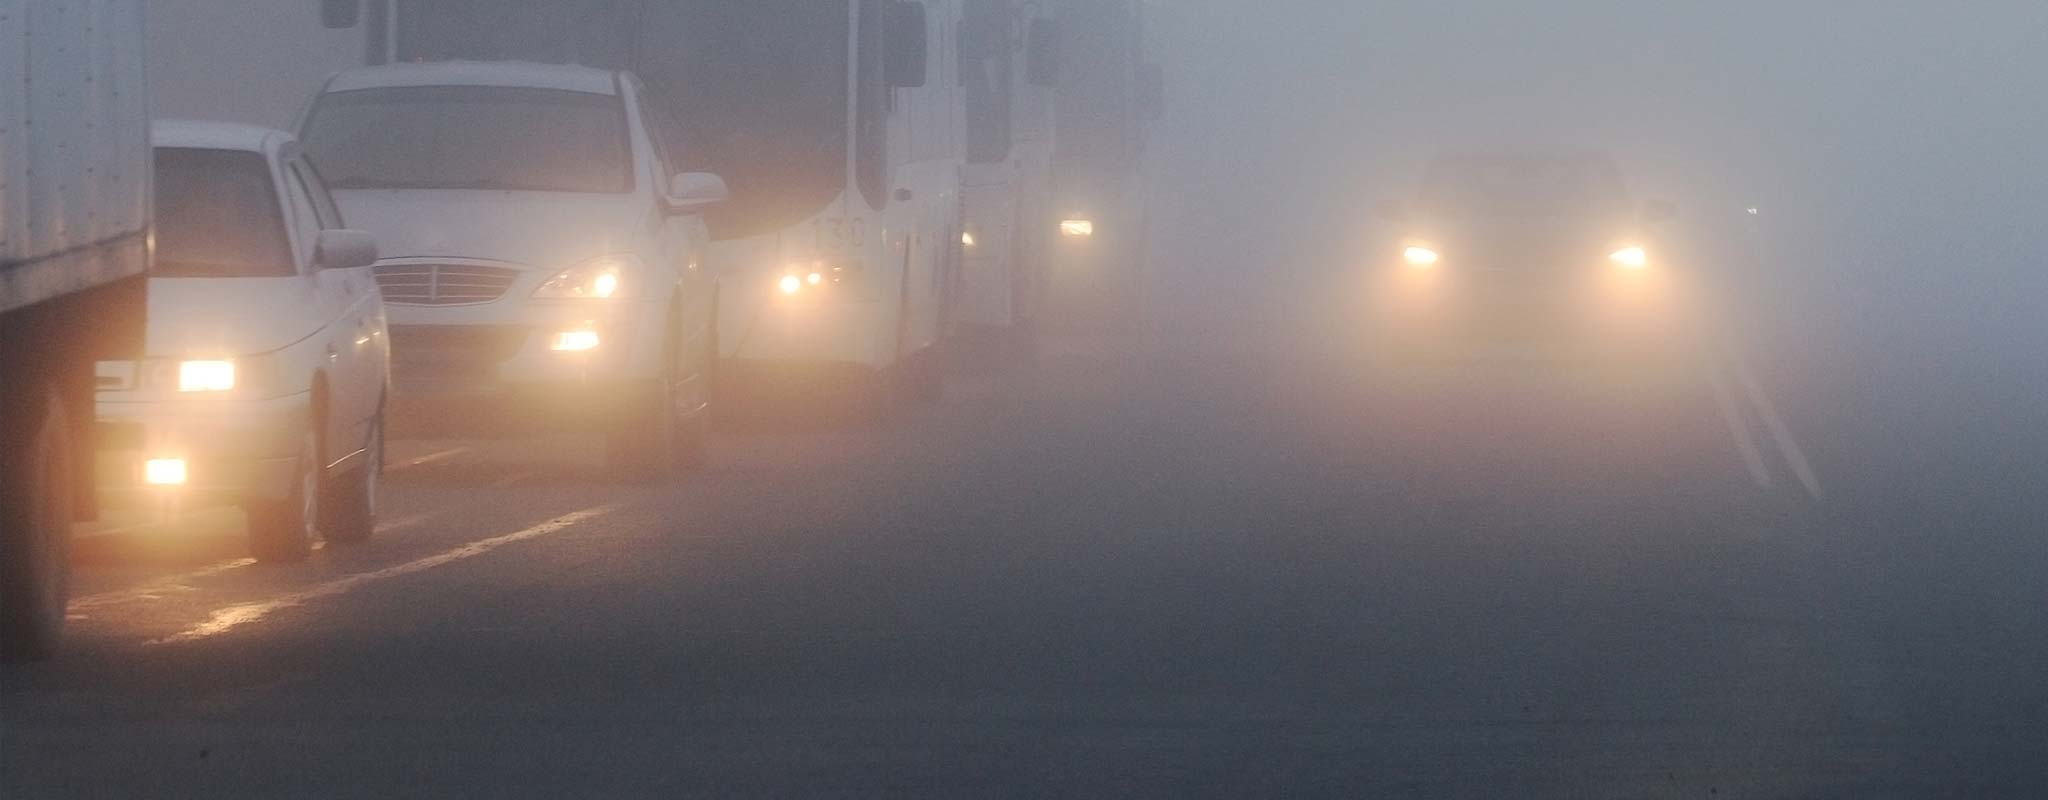 How Do I Drive Safely in Fog? - Les Schwab